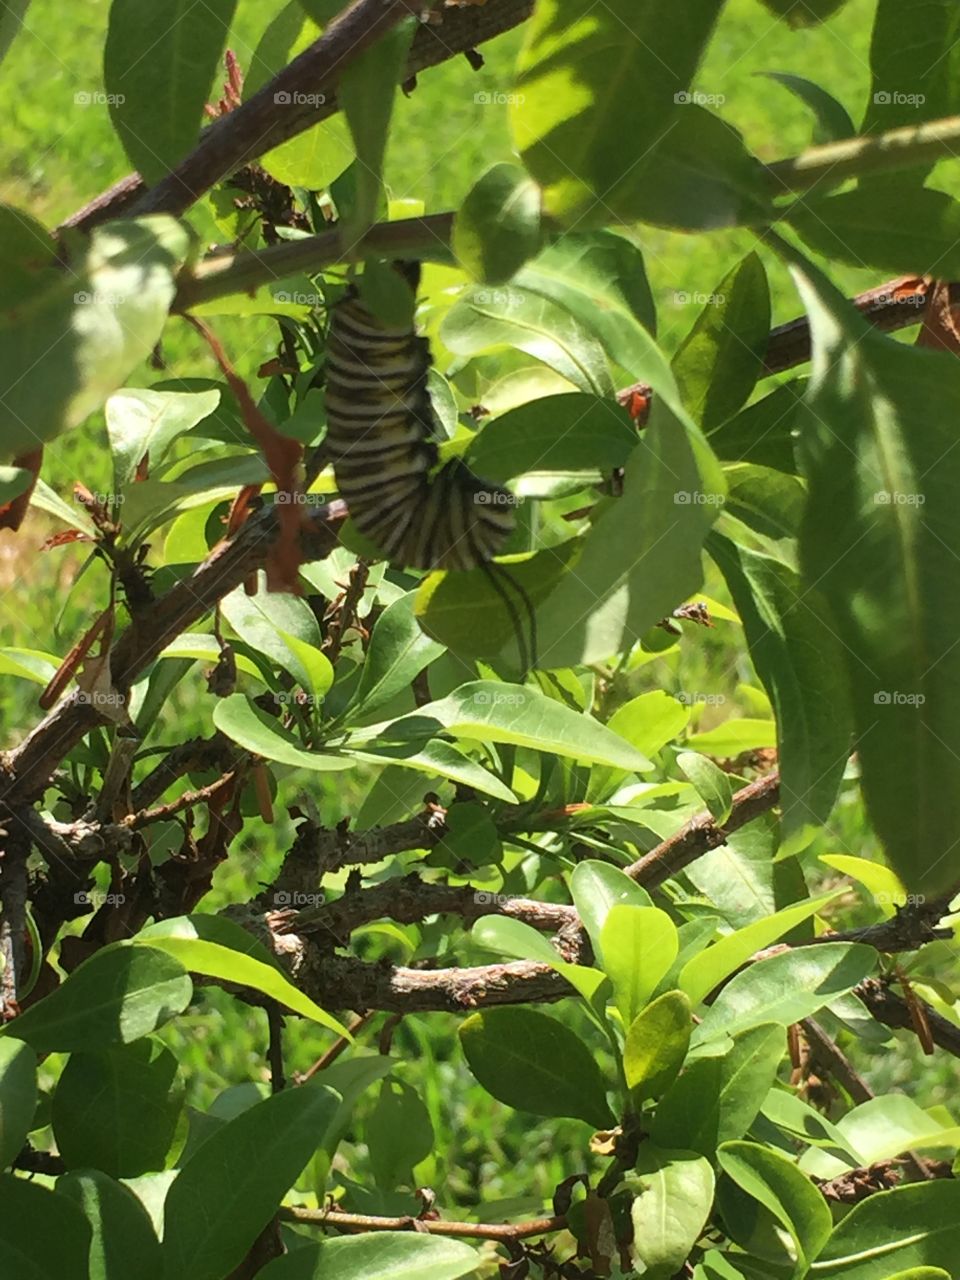 Monarch caterpillar in his J